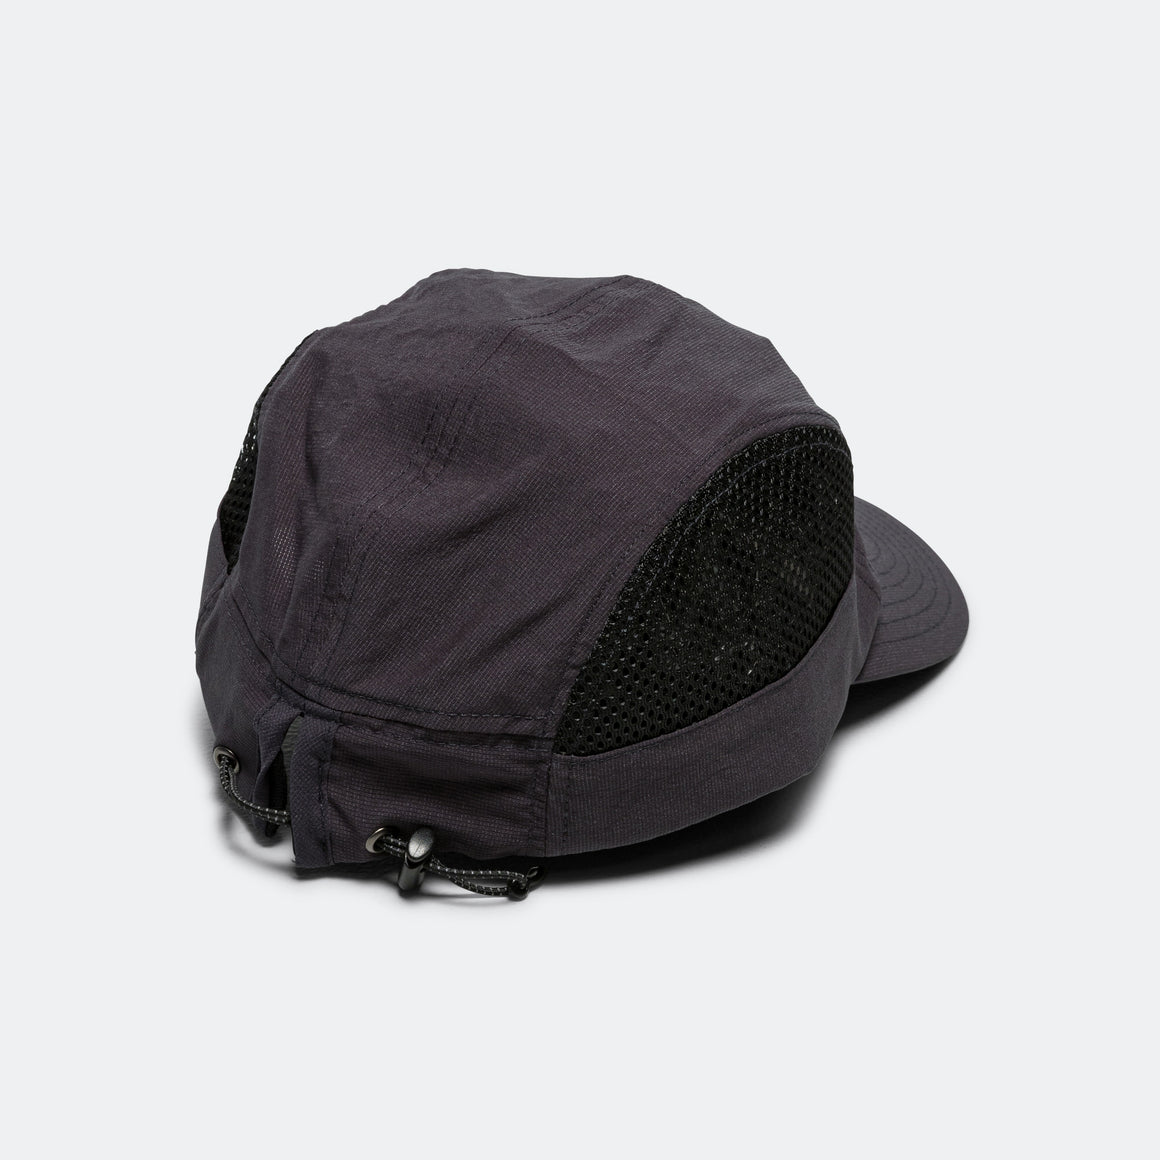 Air Cloth Mesh Jet Cap - Black